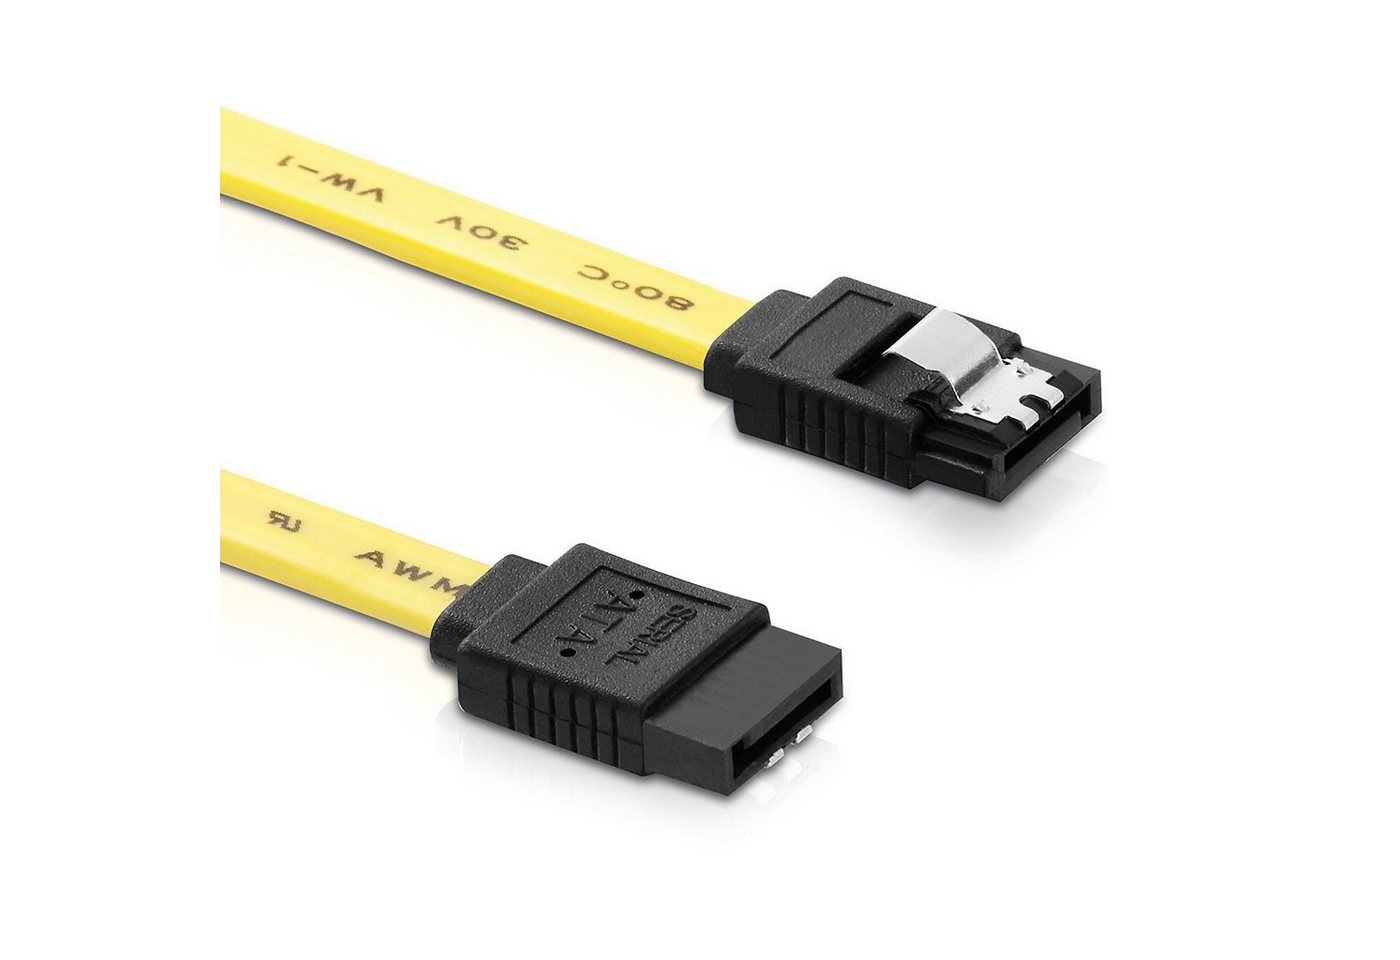 adaptare adaptare 31205 50 cm SATA-Kabel 6 GB/s mit Metall-Clip gelb Computer-Kabel von adaptare